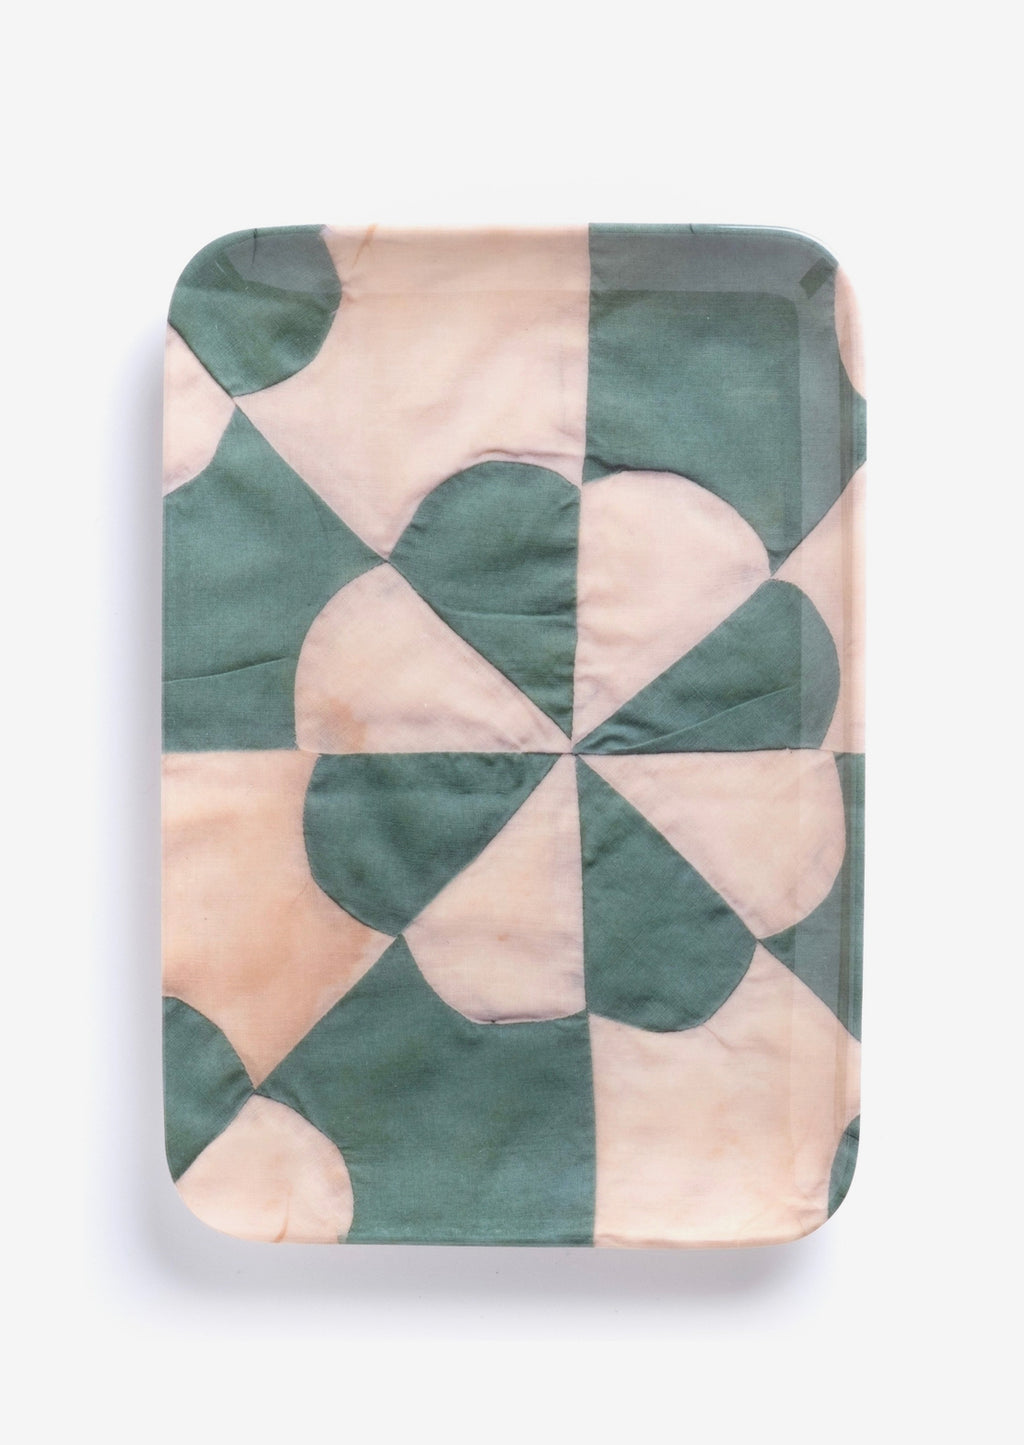 Medium / Green Multi: A patterned melamine tray in quilt pattern.